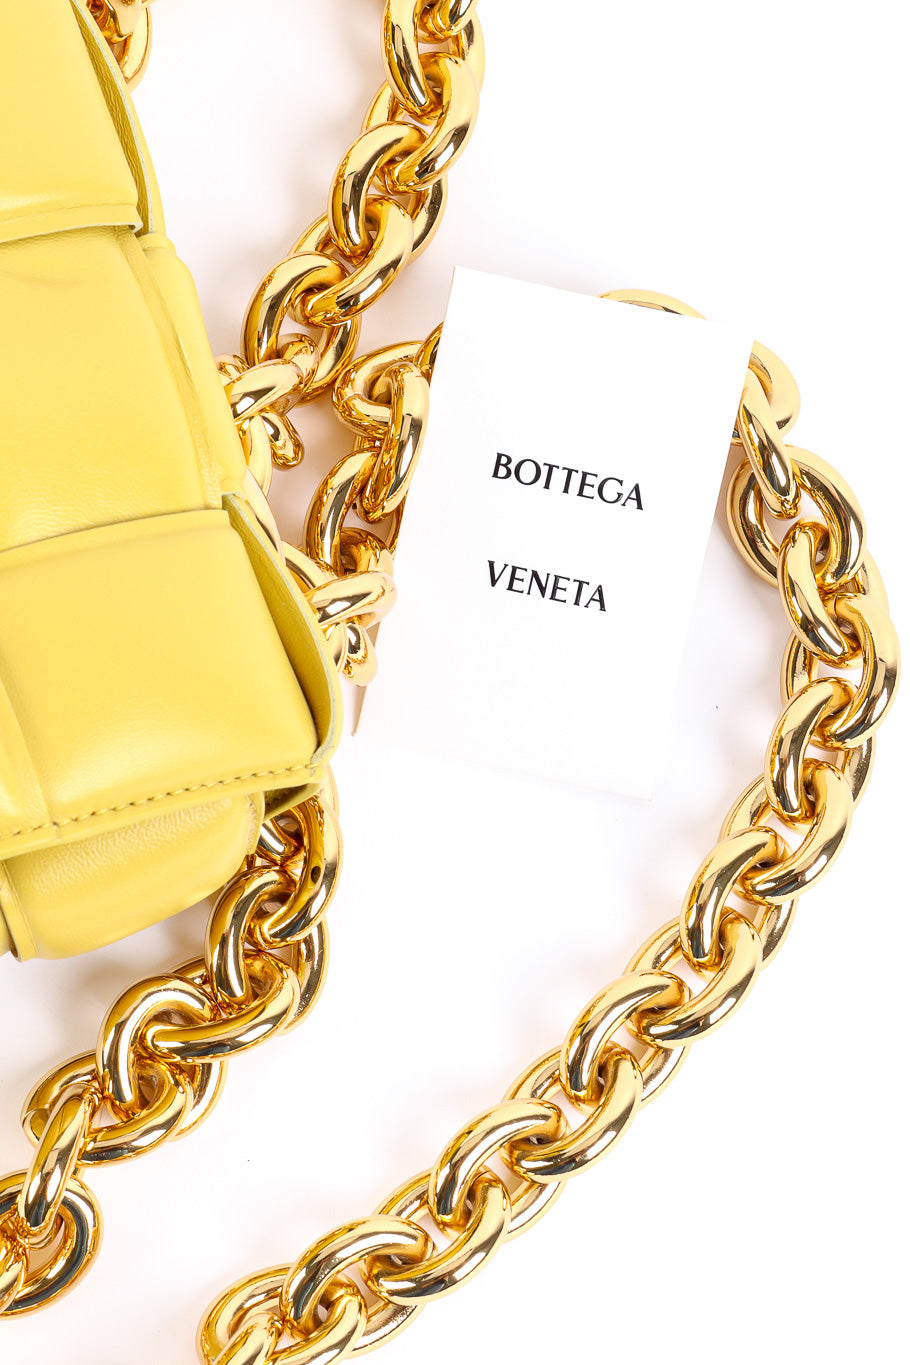 Bottega Veneta padded leather bag authenticity @recessla